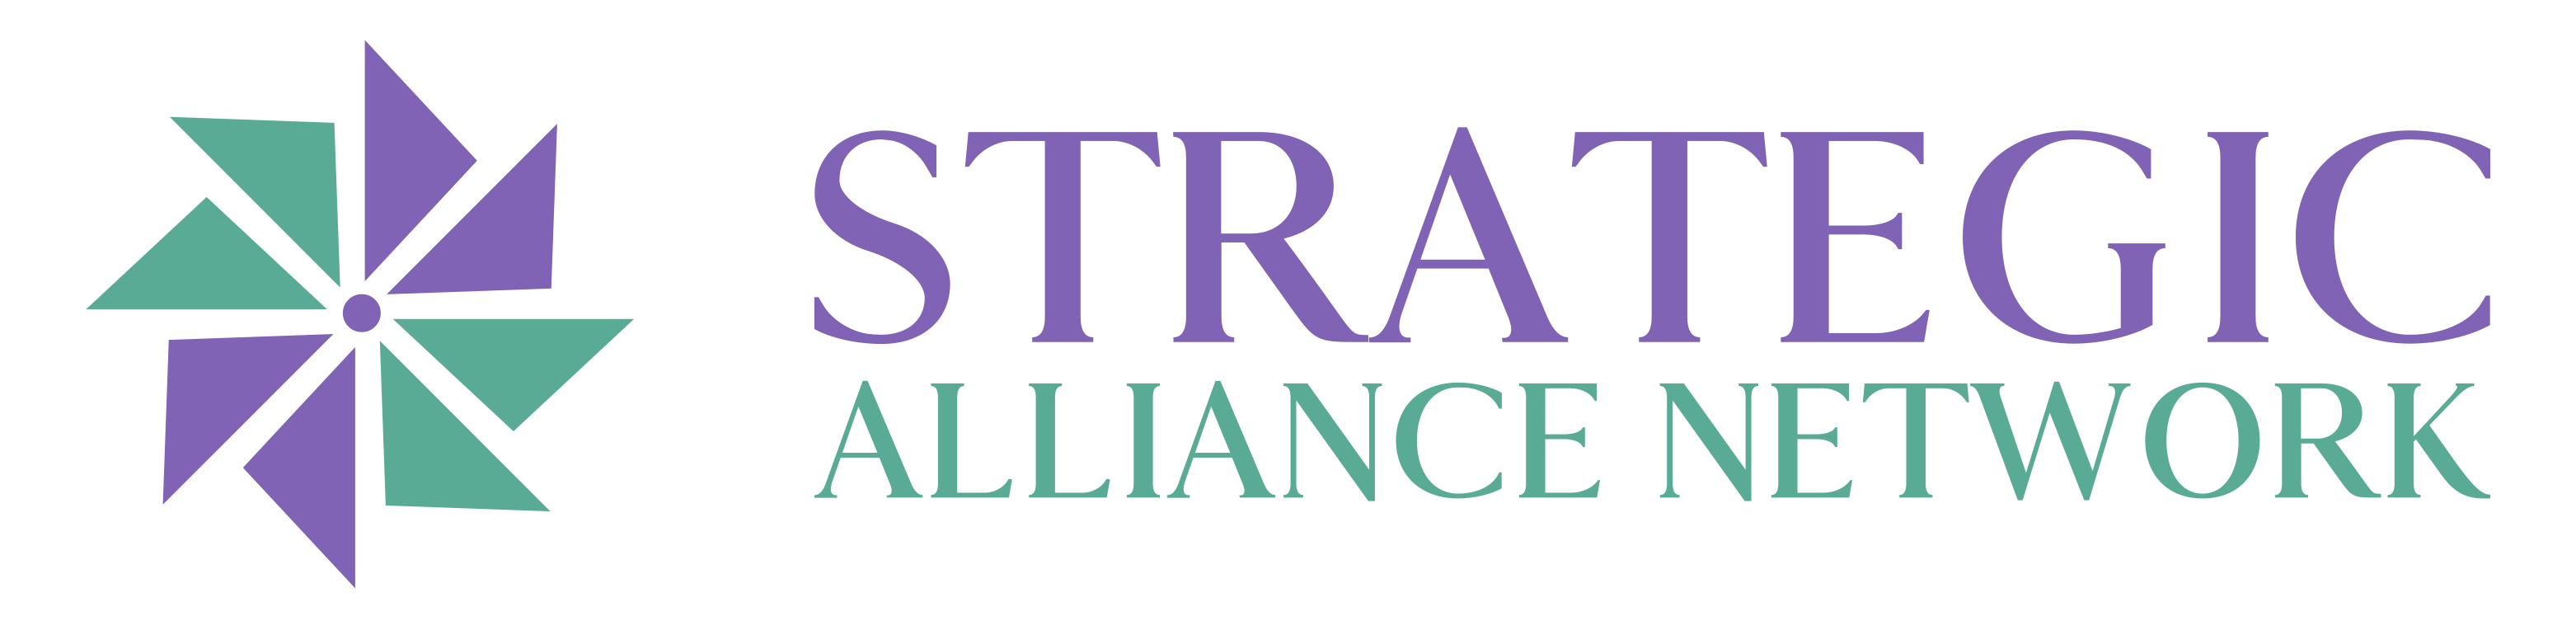 Strategic Alliance Network Victoria